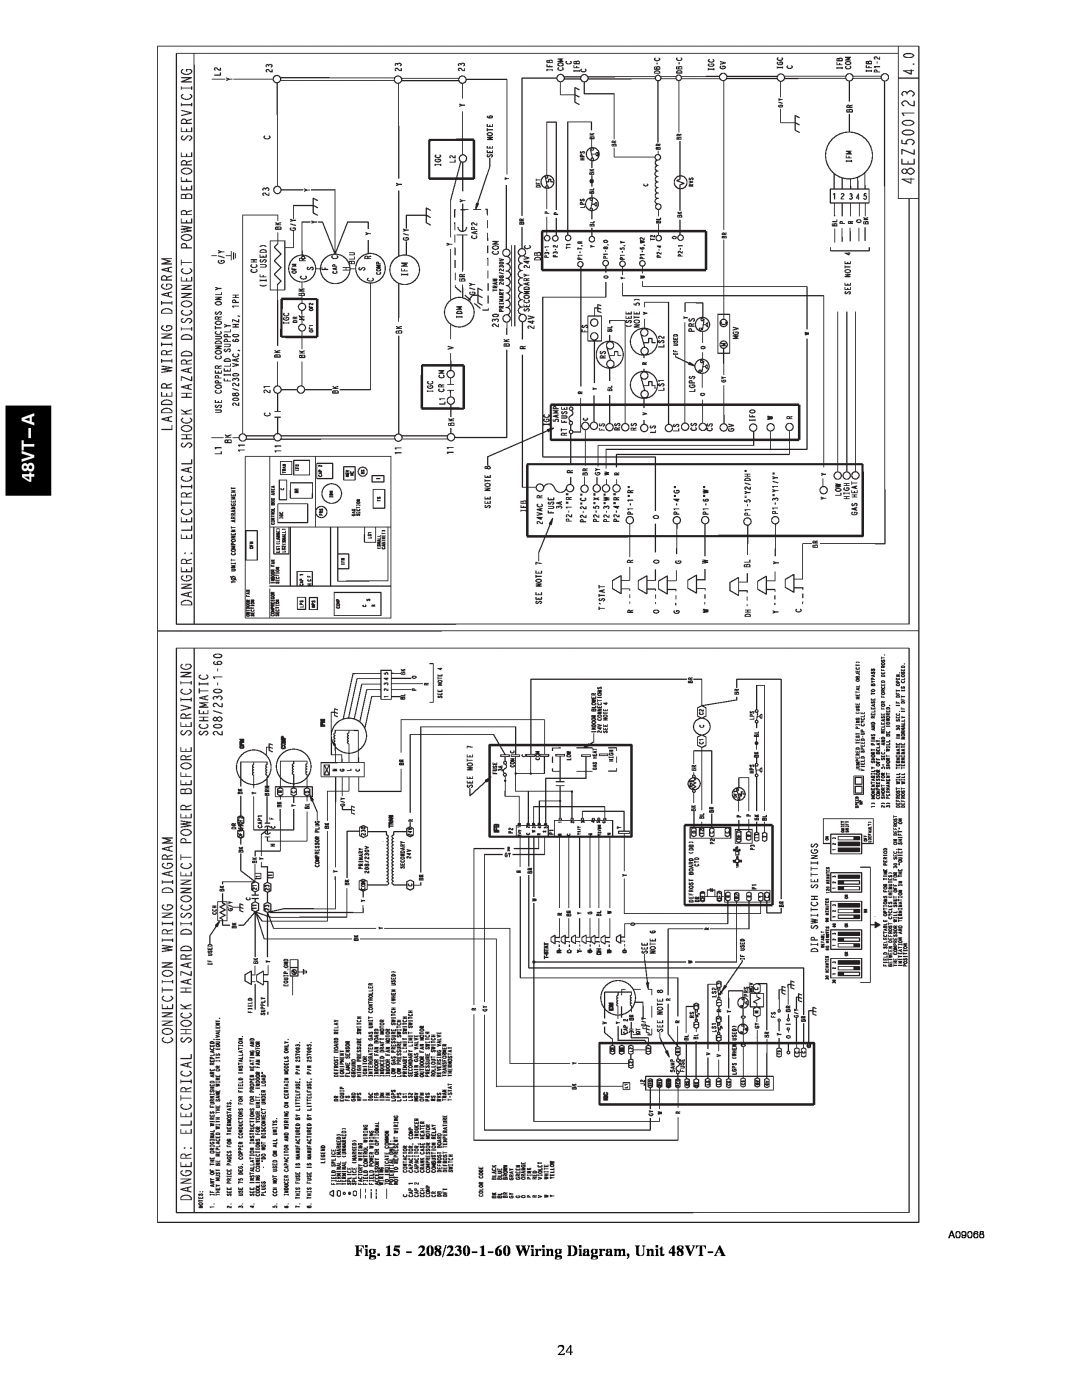 Carrier 48VT(N) installation instructions 48VT A, 208/230-1-60Wiring Diagram, Unit 48VT-A 